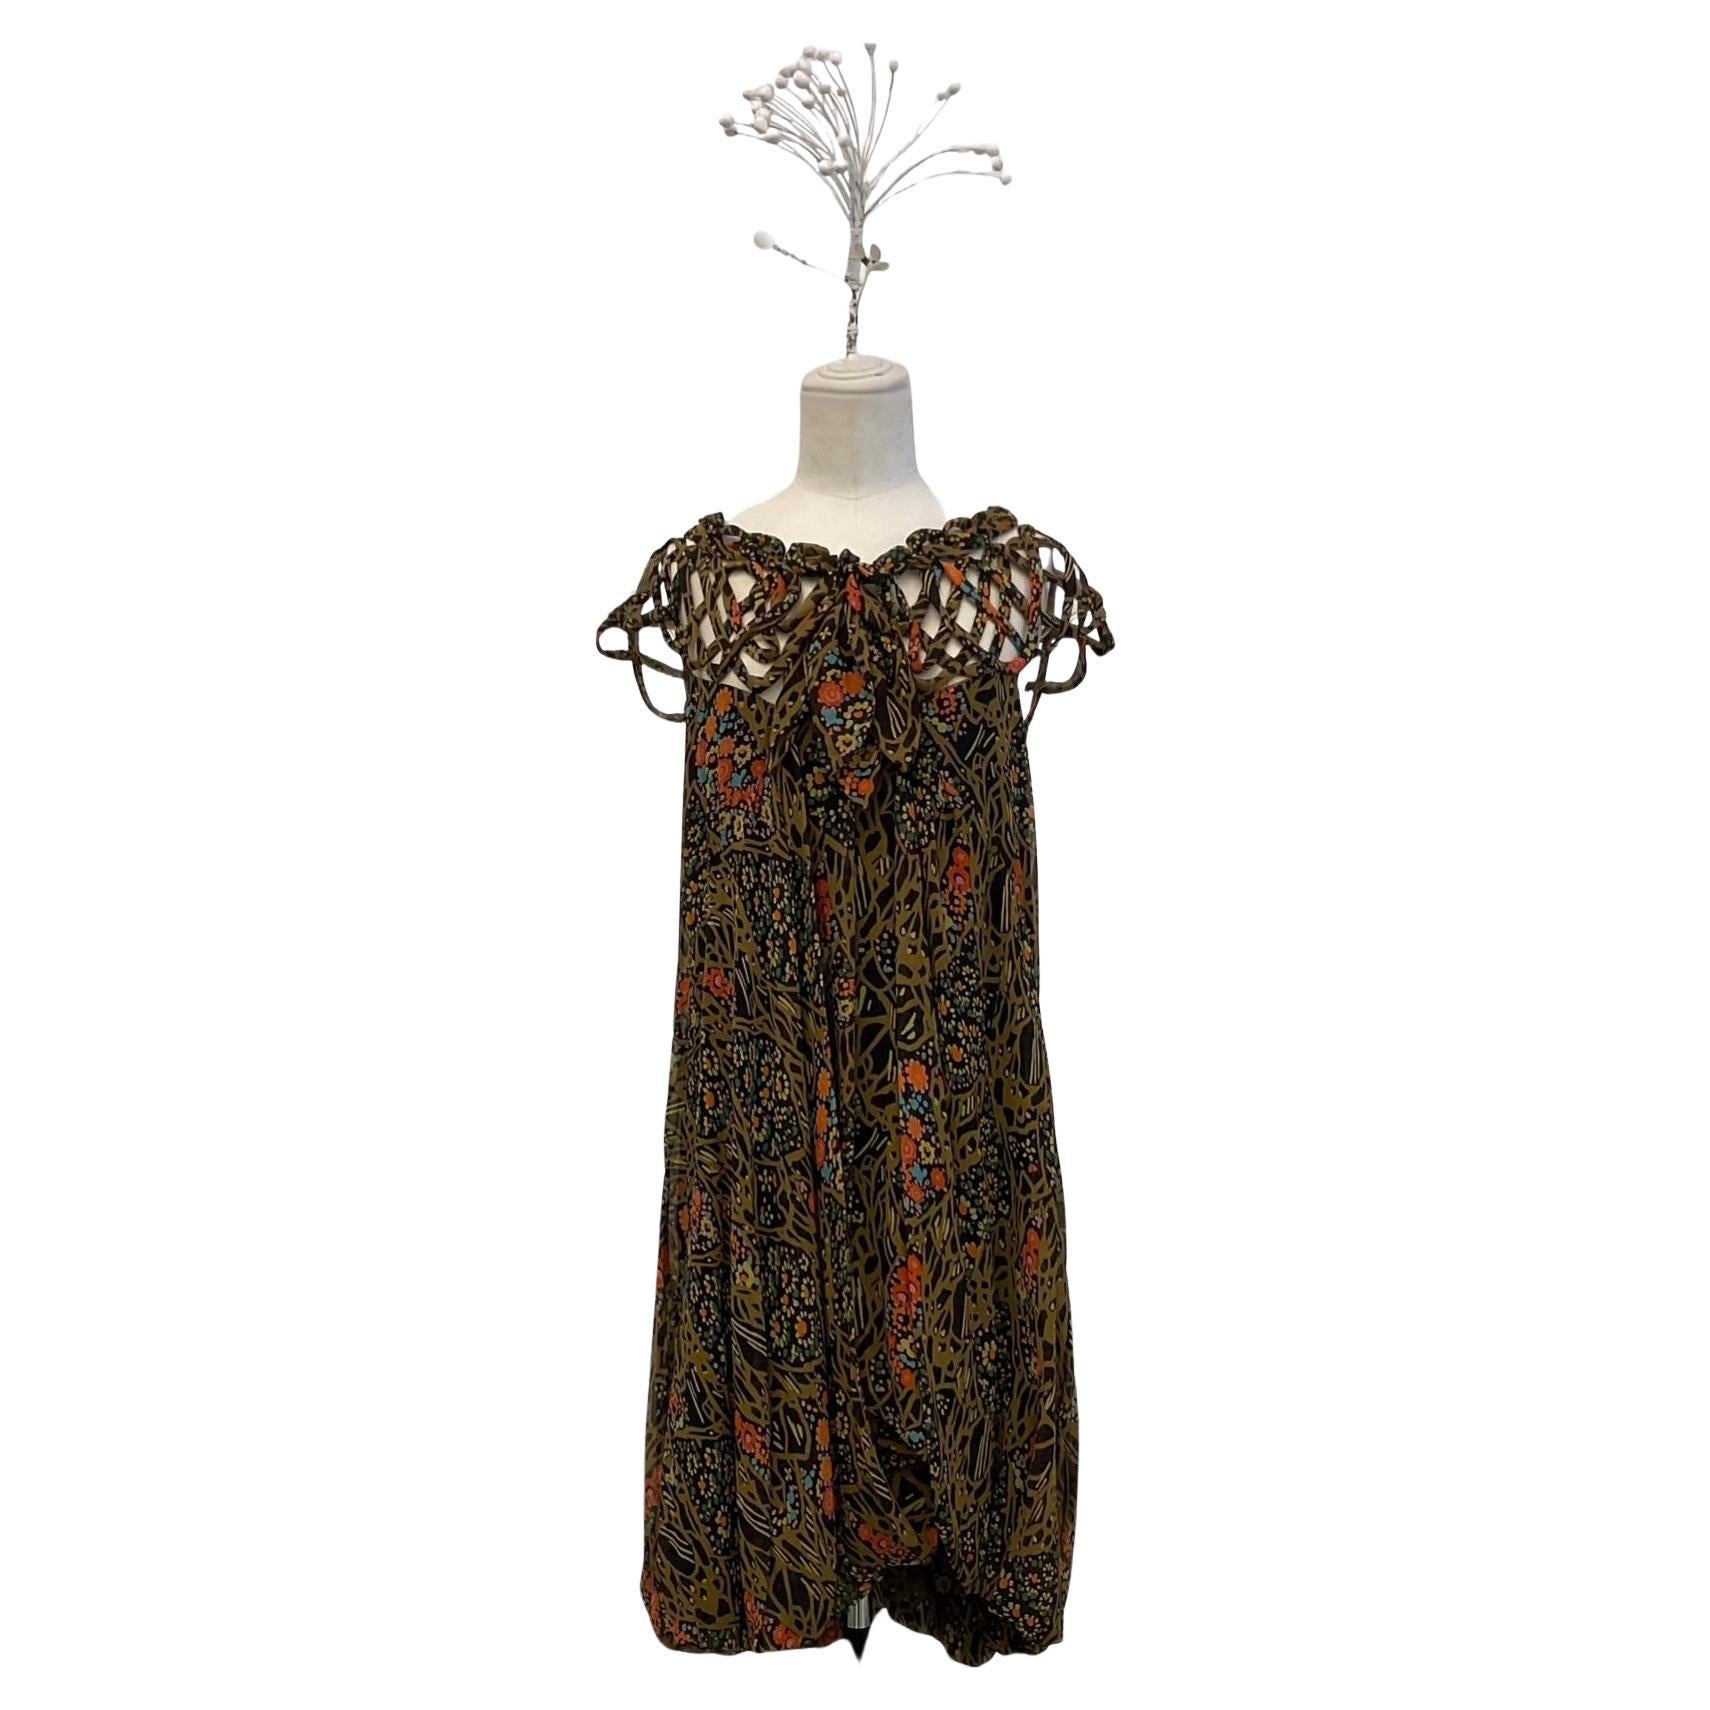 JOHN GALLIANO dress "Opium"  in multicolor printed silk georgette FW 2008